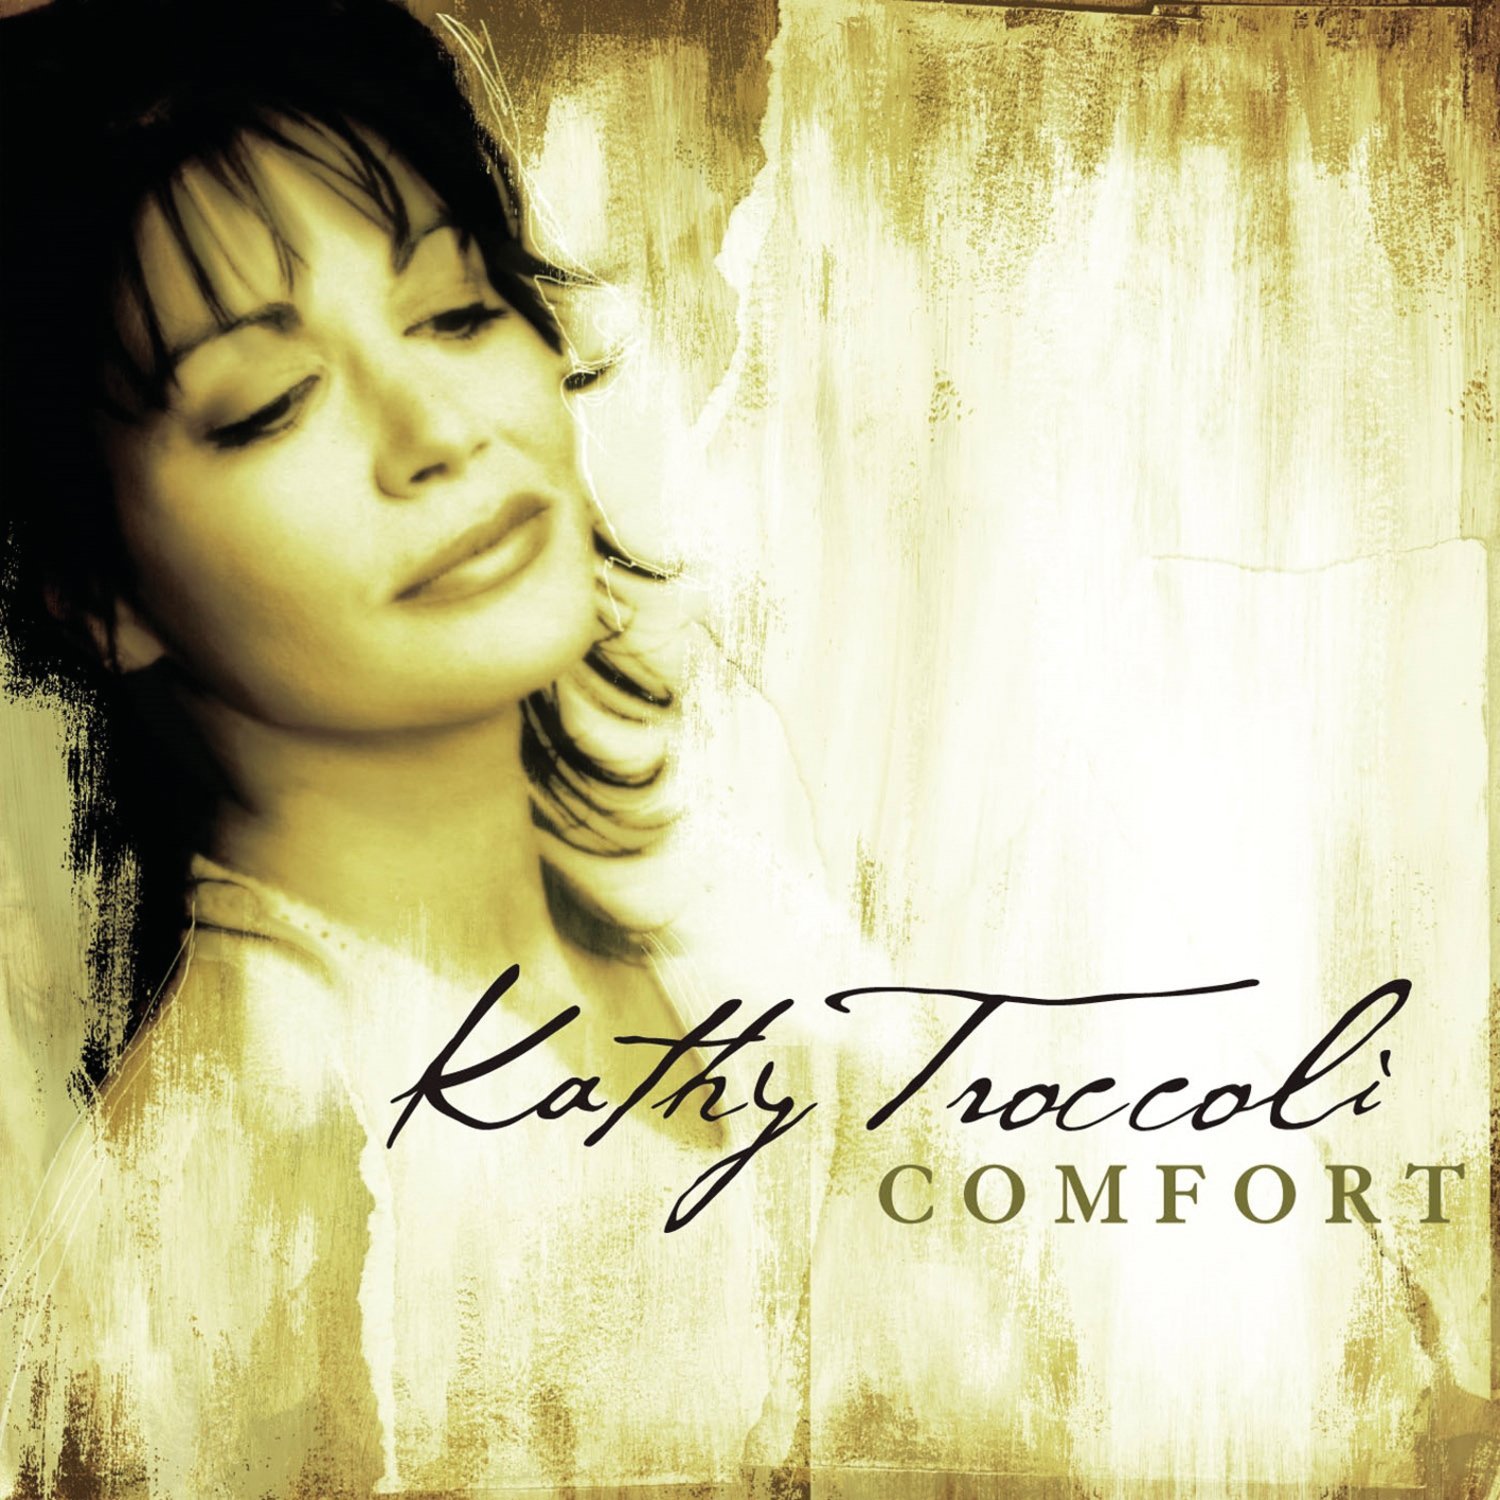 Kathy Troccoli - Comfort (CD)